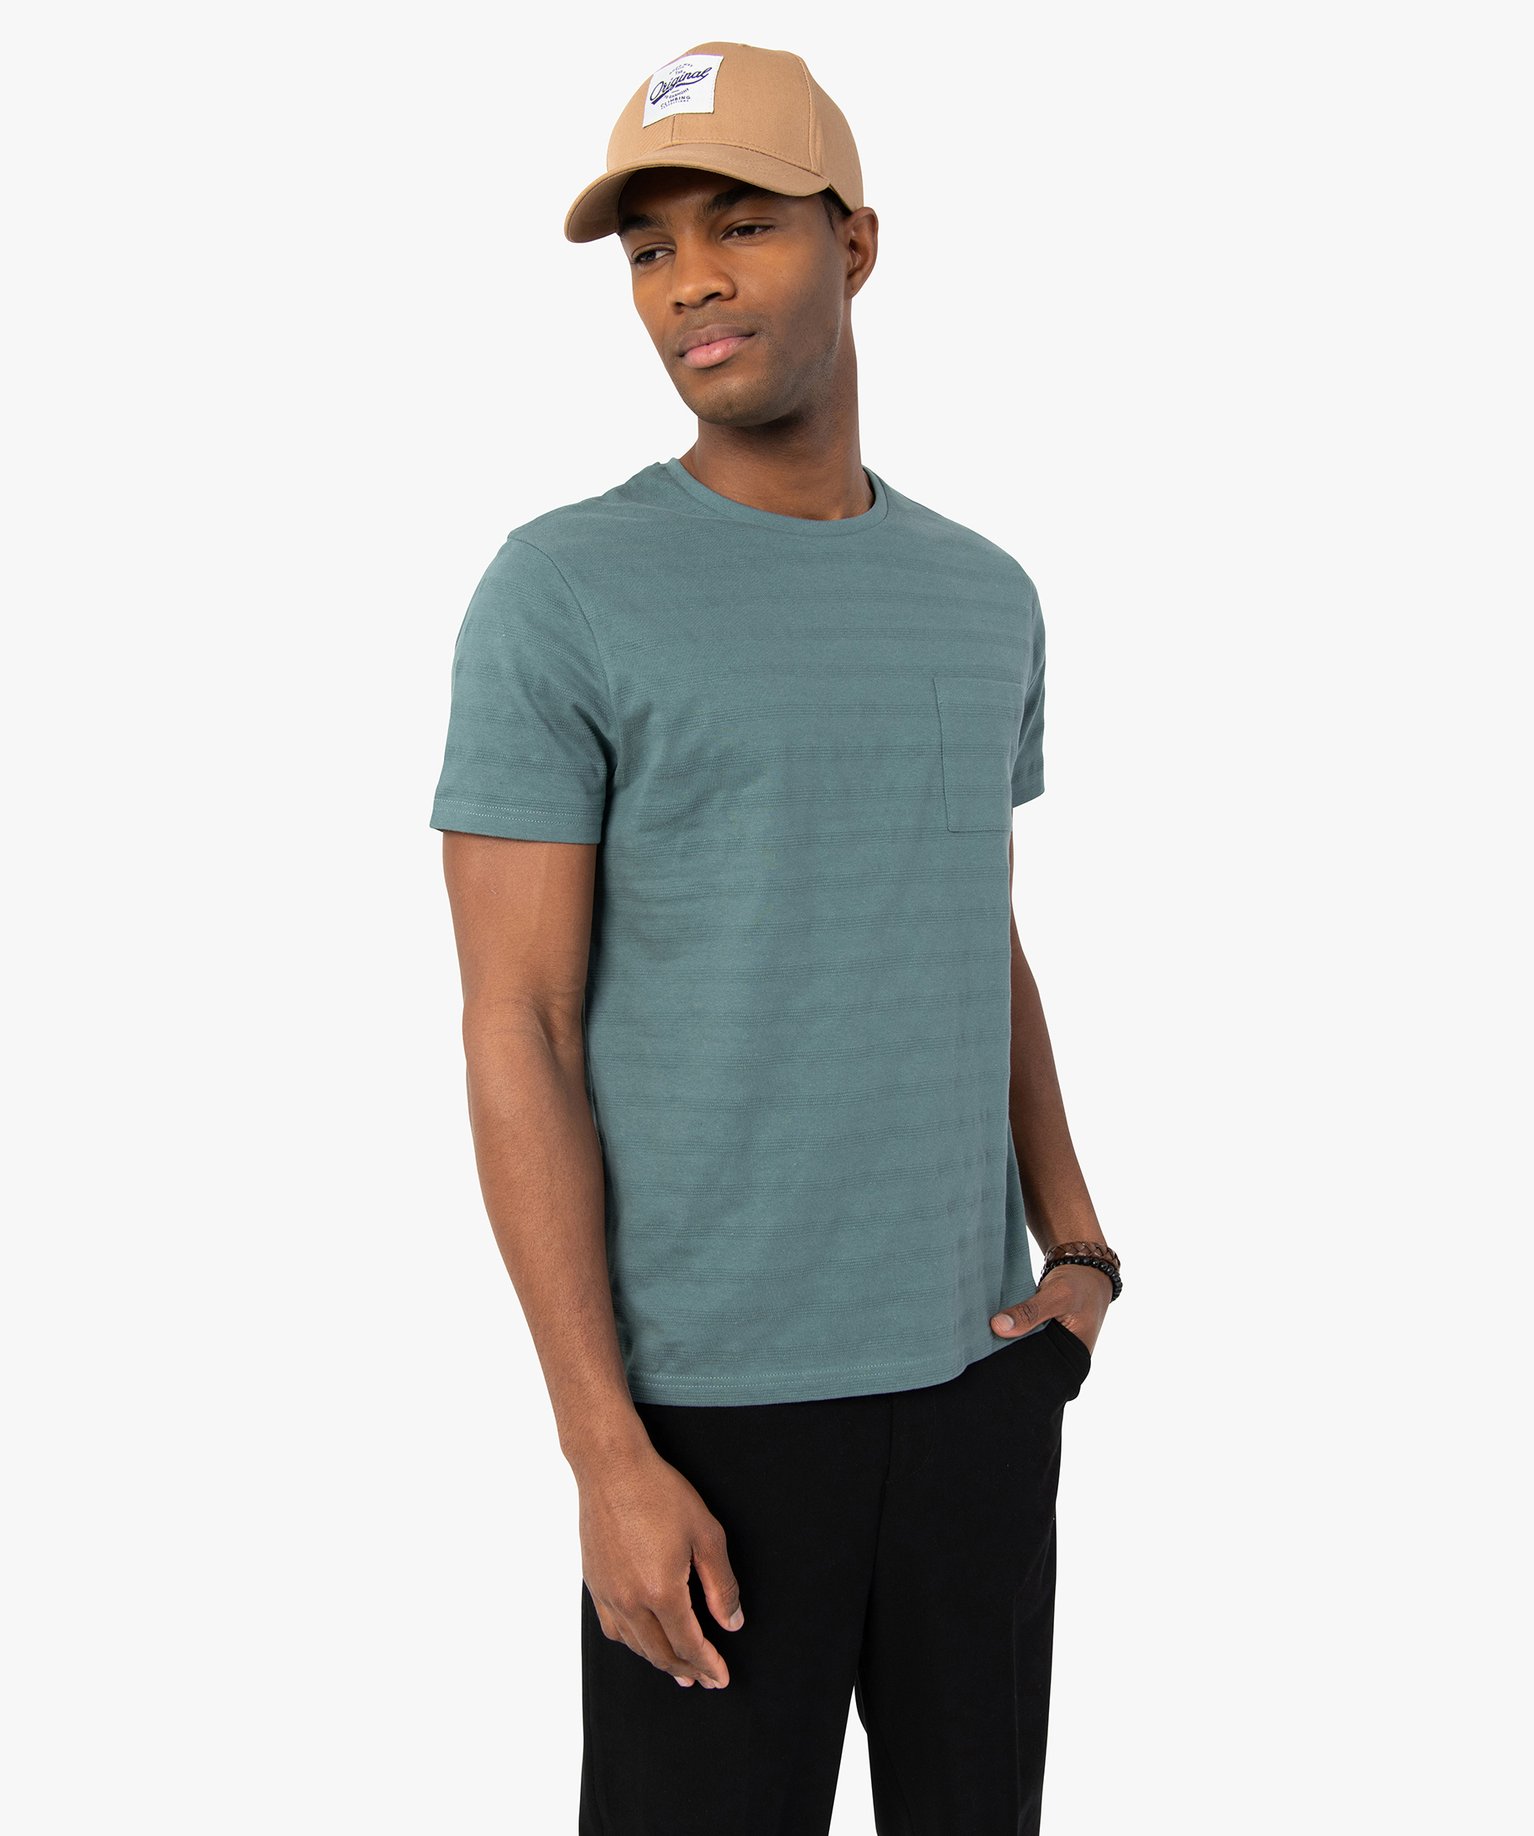 tee-shirt homme avec poche poitrine vert tee-shirts